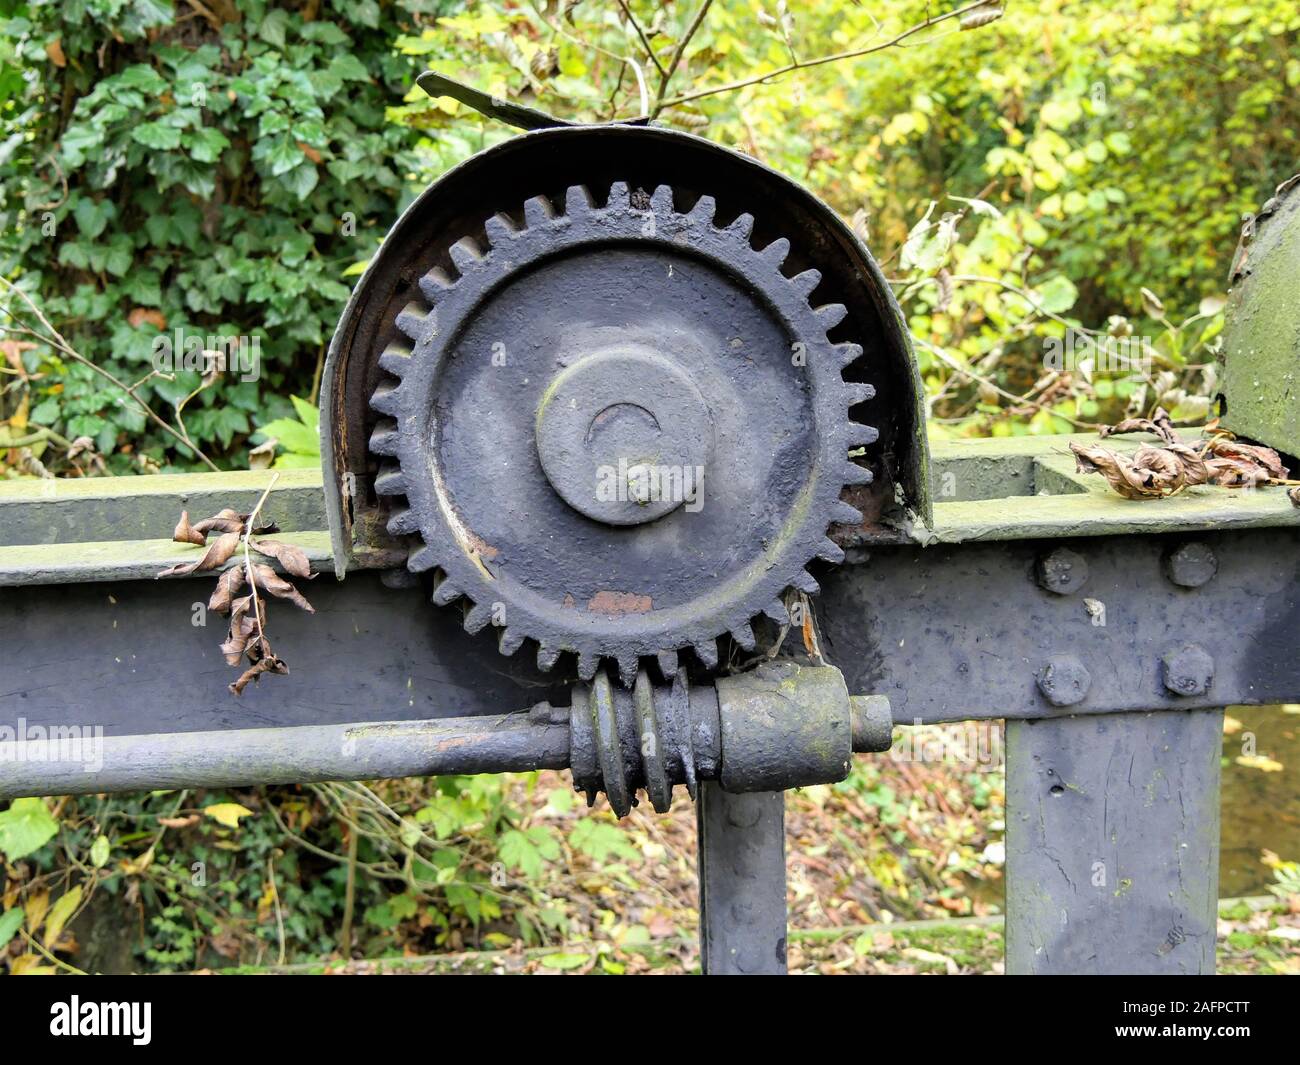 Old metal gear de esclusa gear Foto de stock